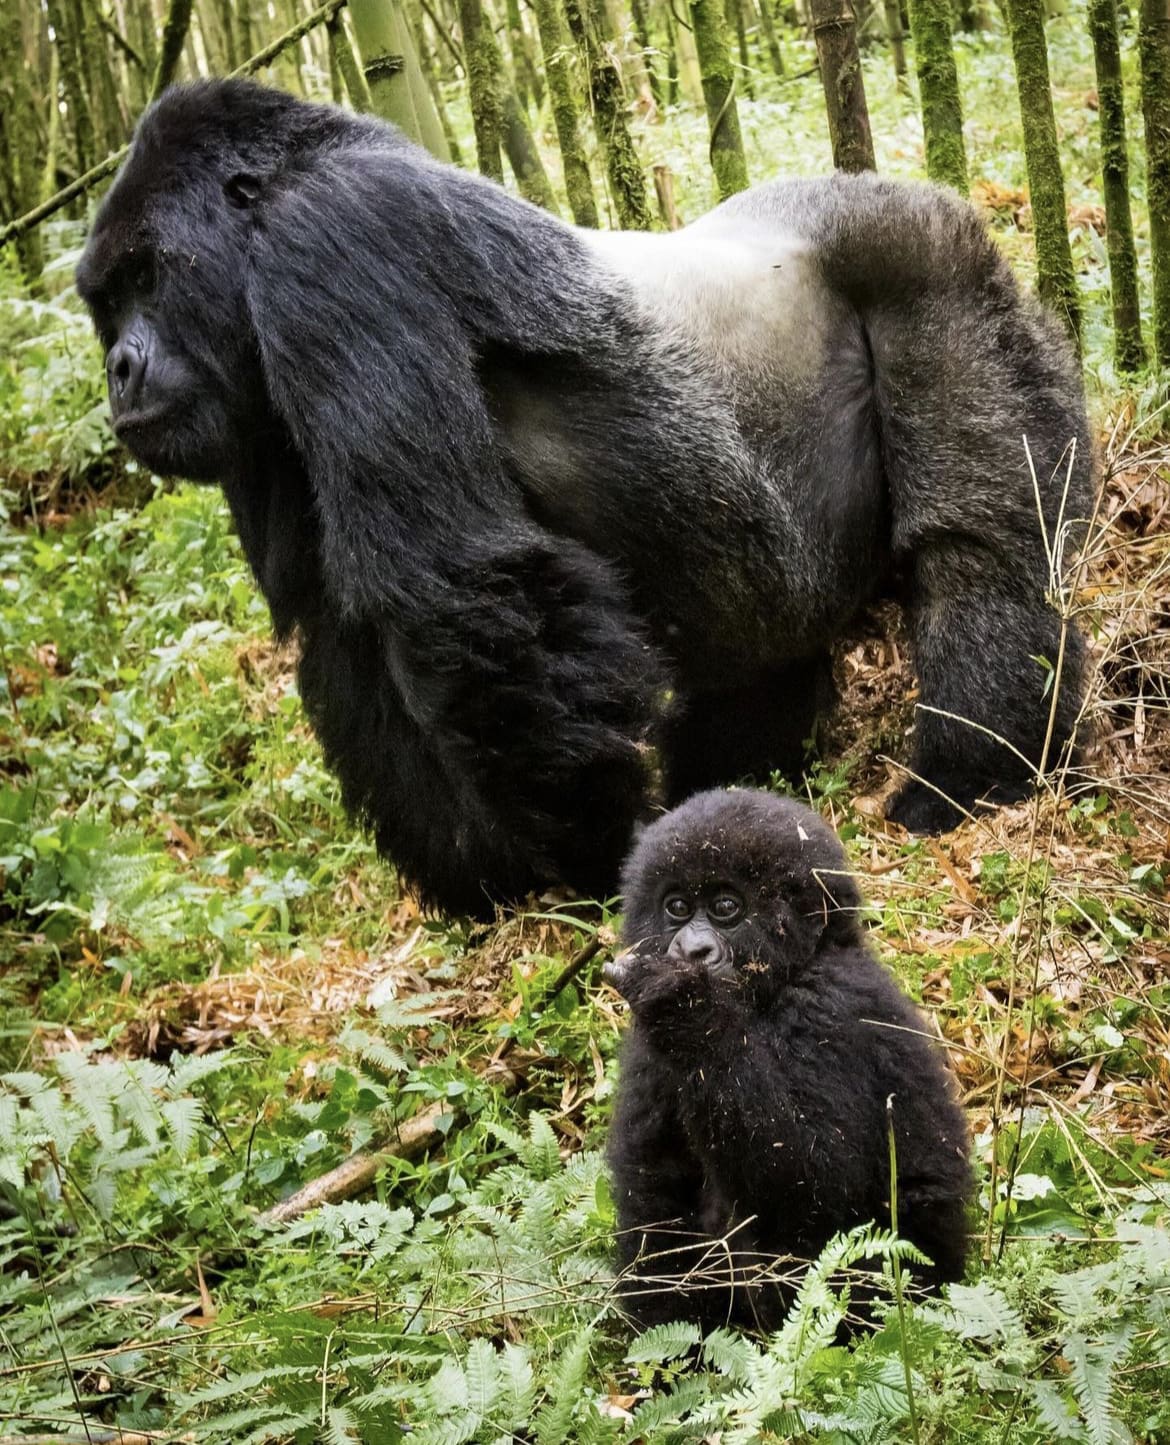 Silverback gorilla and baby